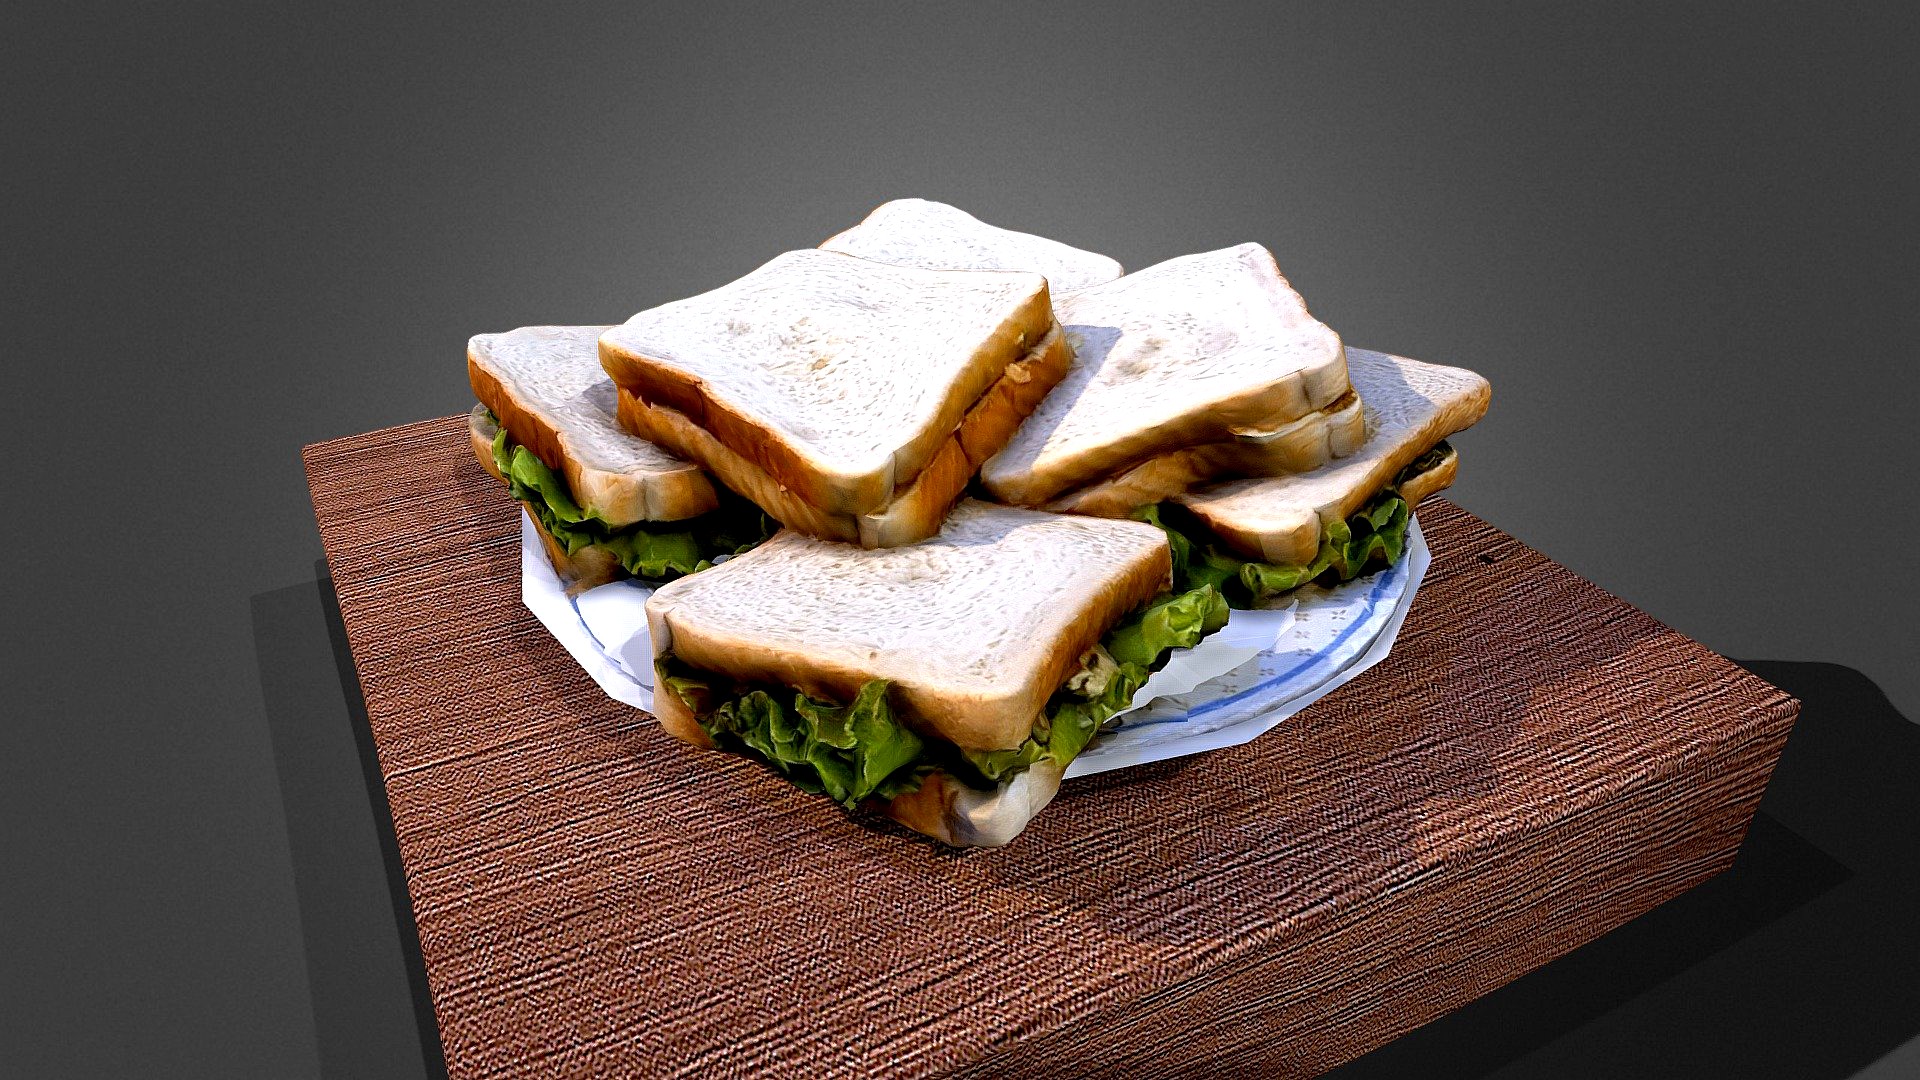 6 sandwiches ham lettuce cheese pan bread jamon